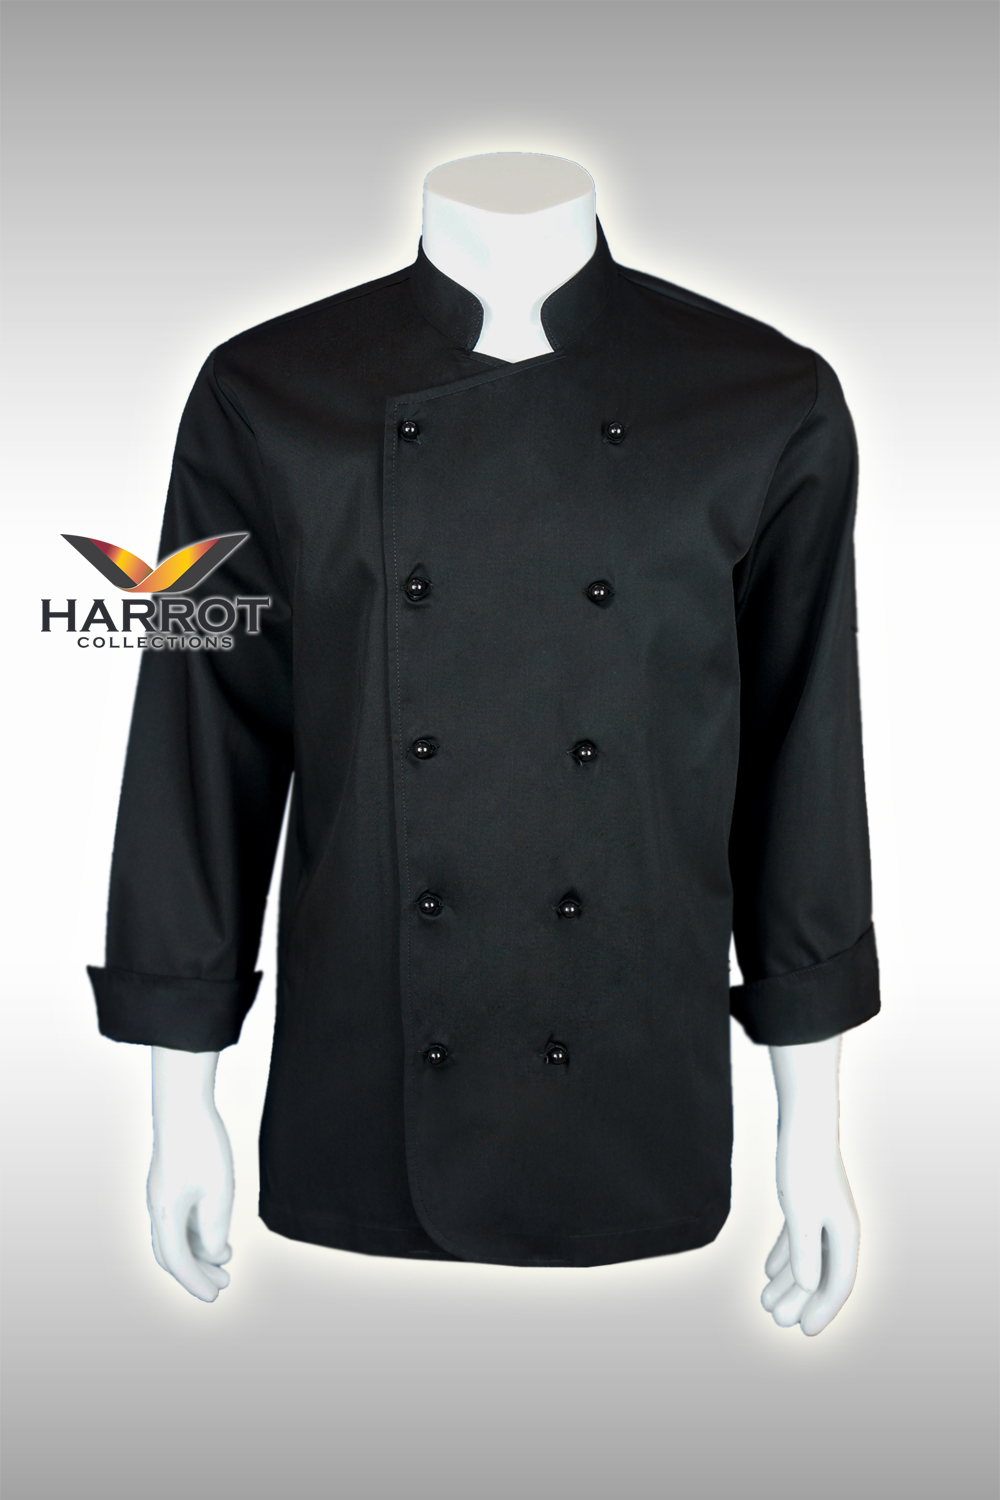 12 Black Chef Jacket Studs NEW 